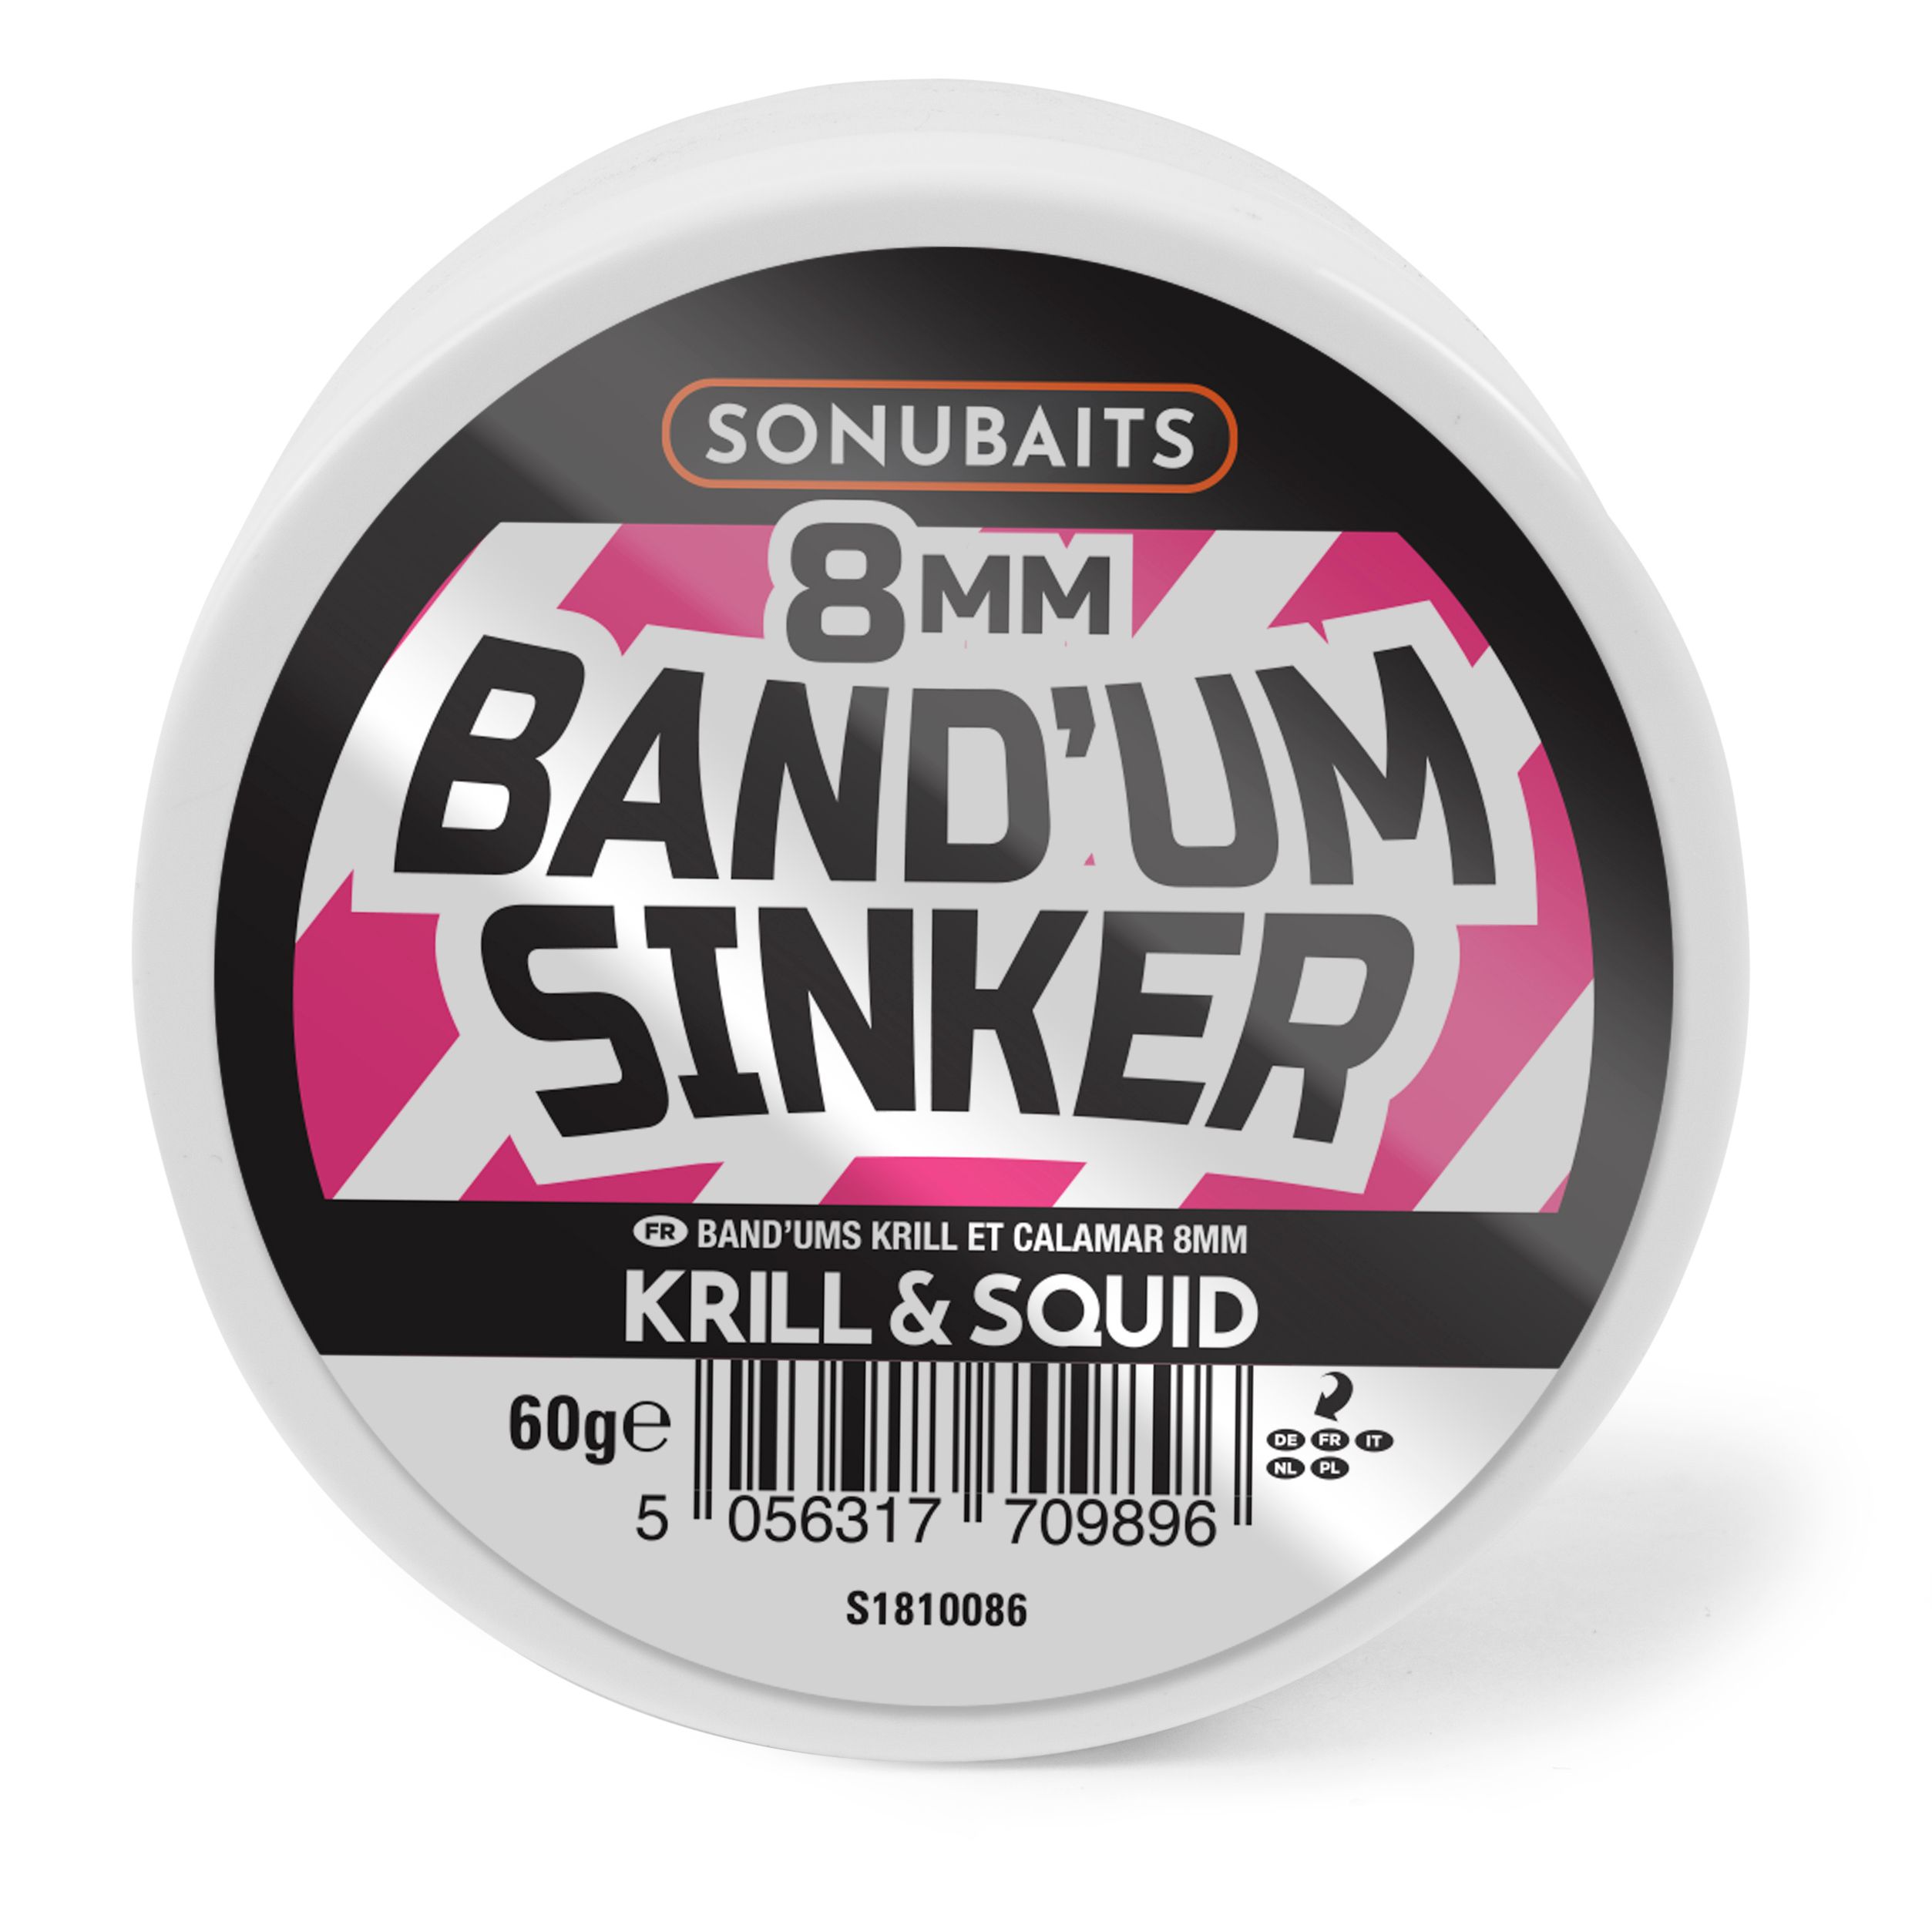 Sonubaits Band'um Sinker Boilies 8mm - Krill & Squid